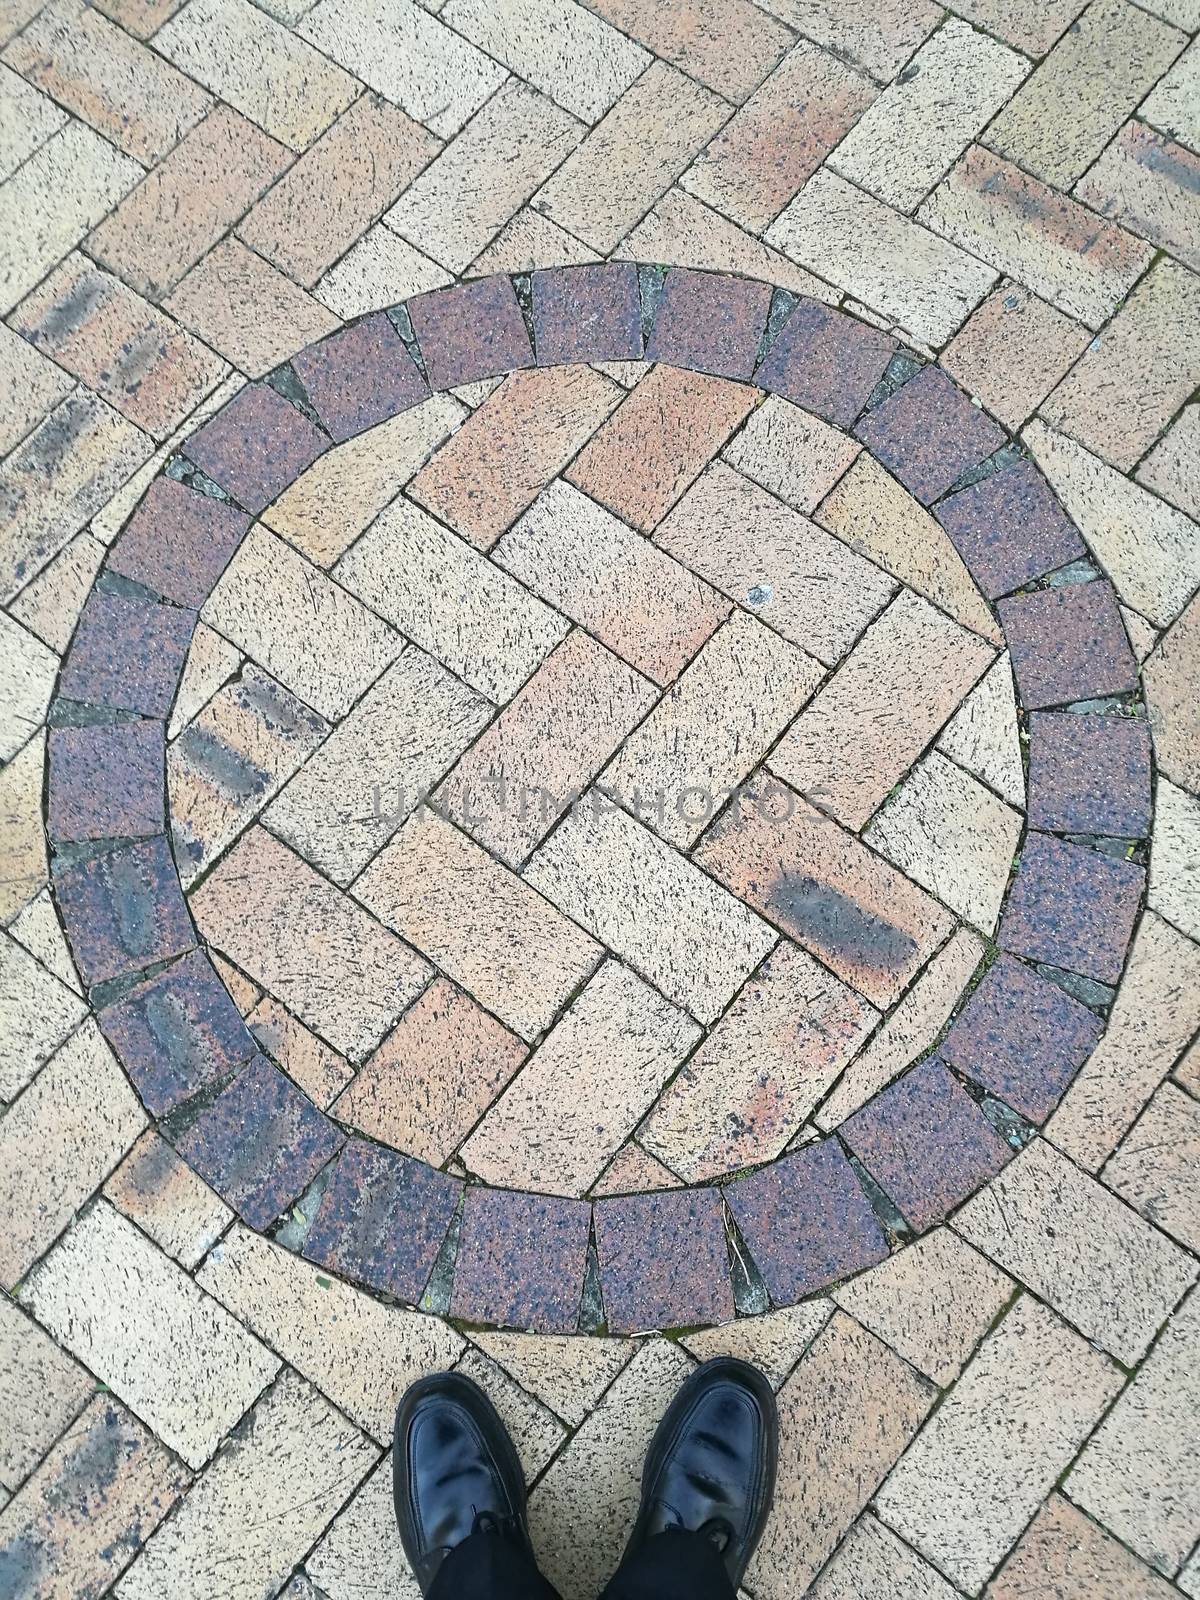 Black leather shoes standing below circle shape cobblestone floor